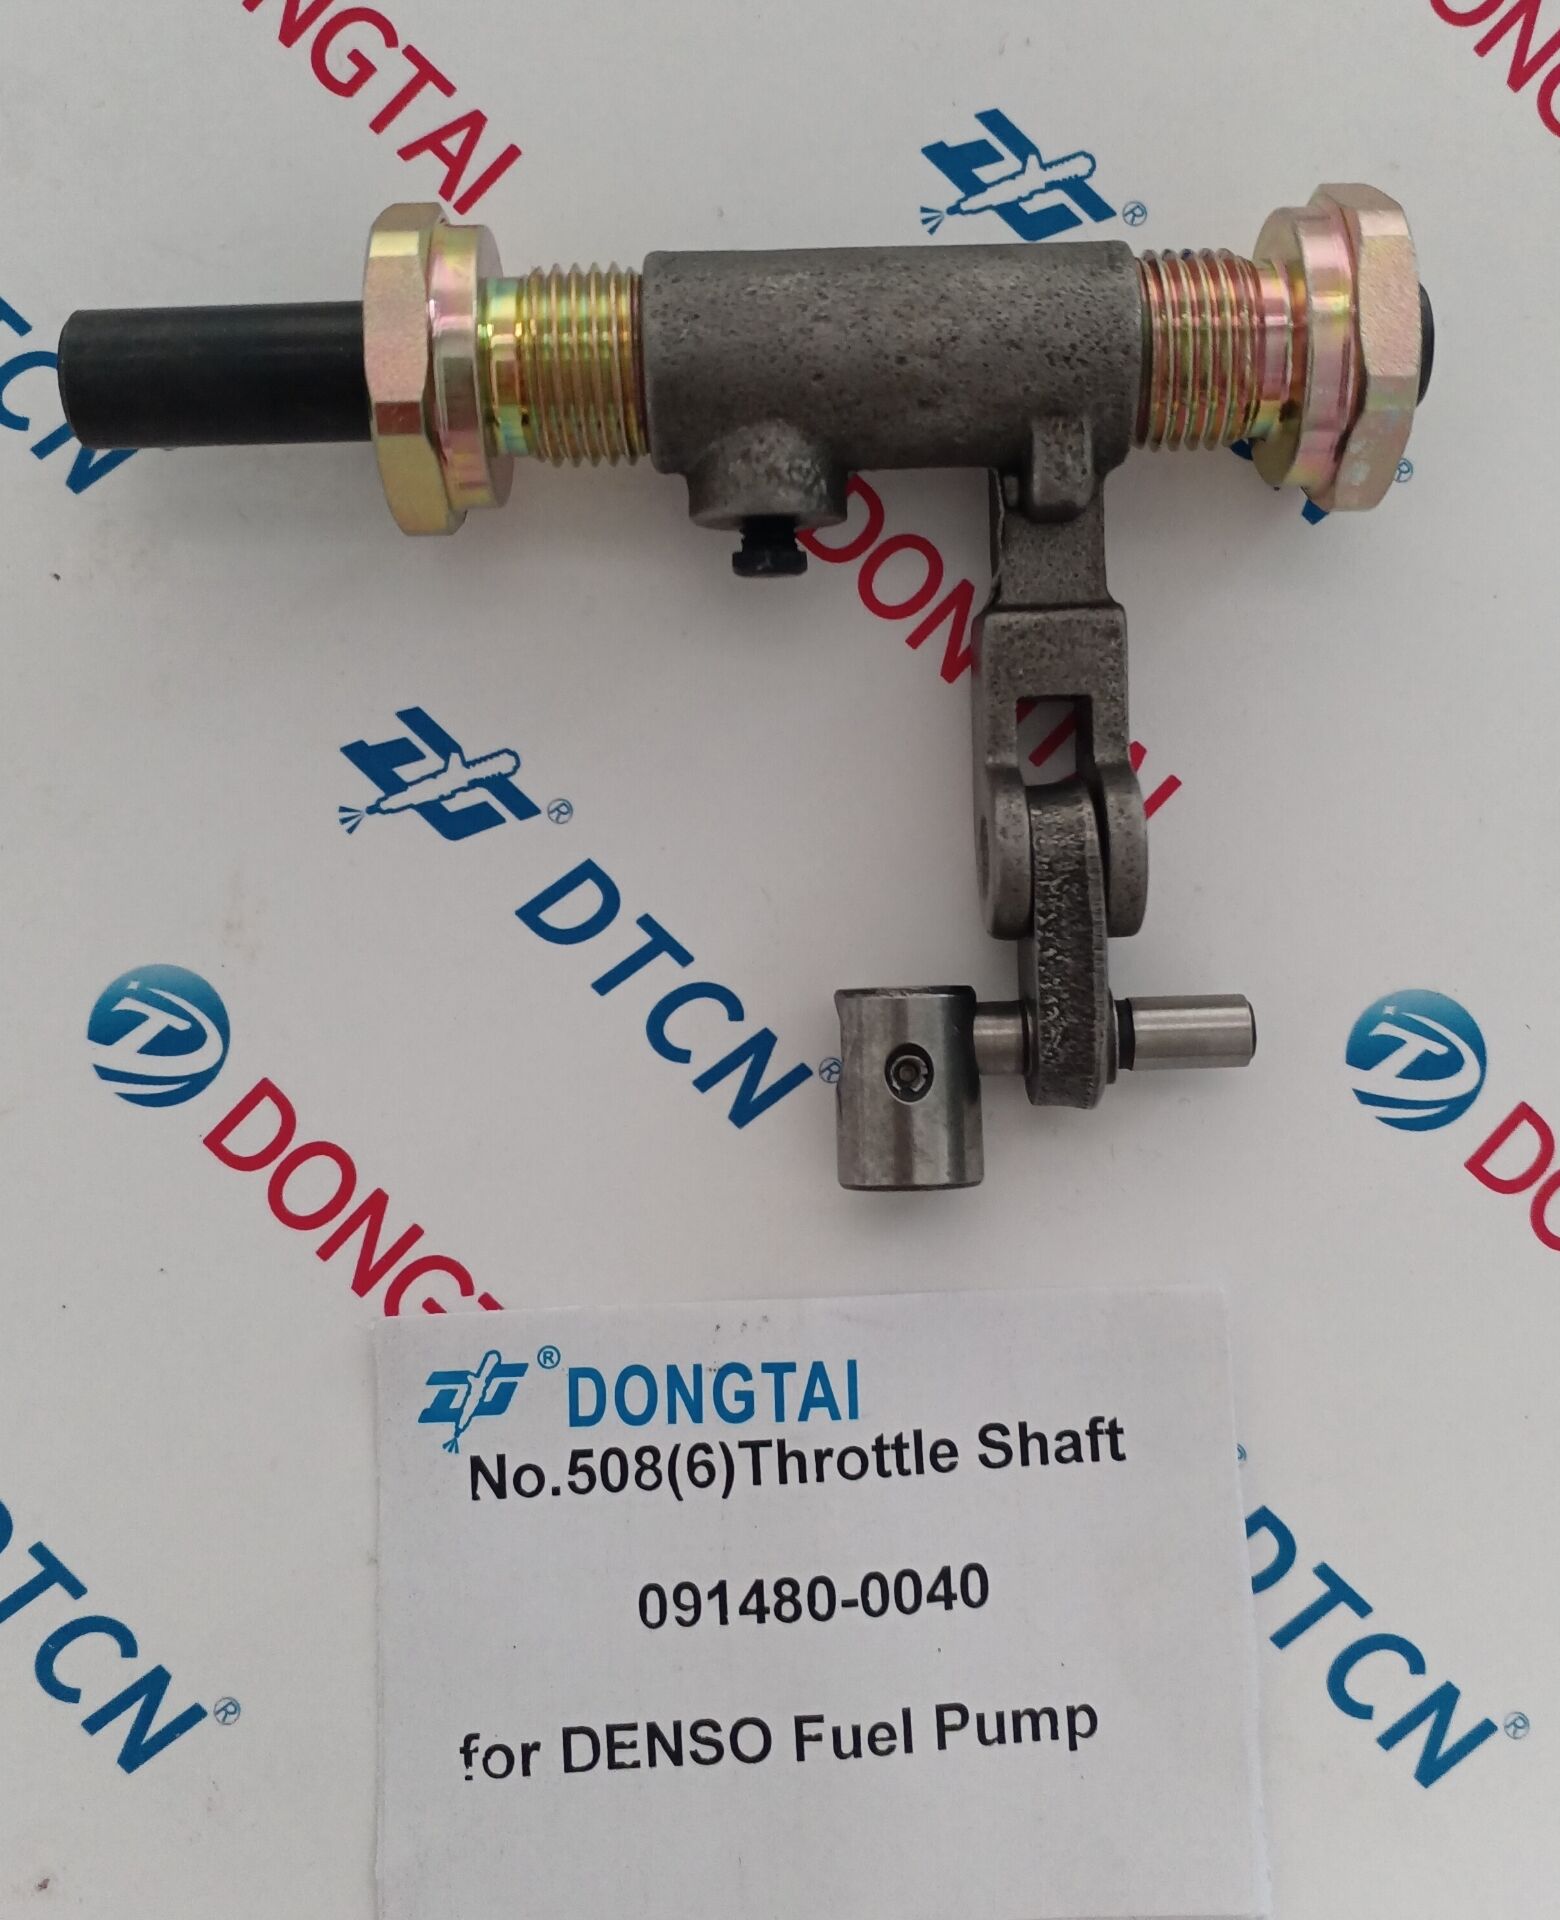 NO.508(6-1) Throttle Shaft 091480-0040 for DENSO Fuel Pump